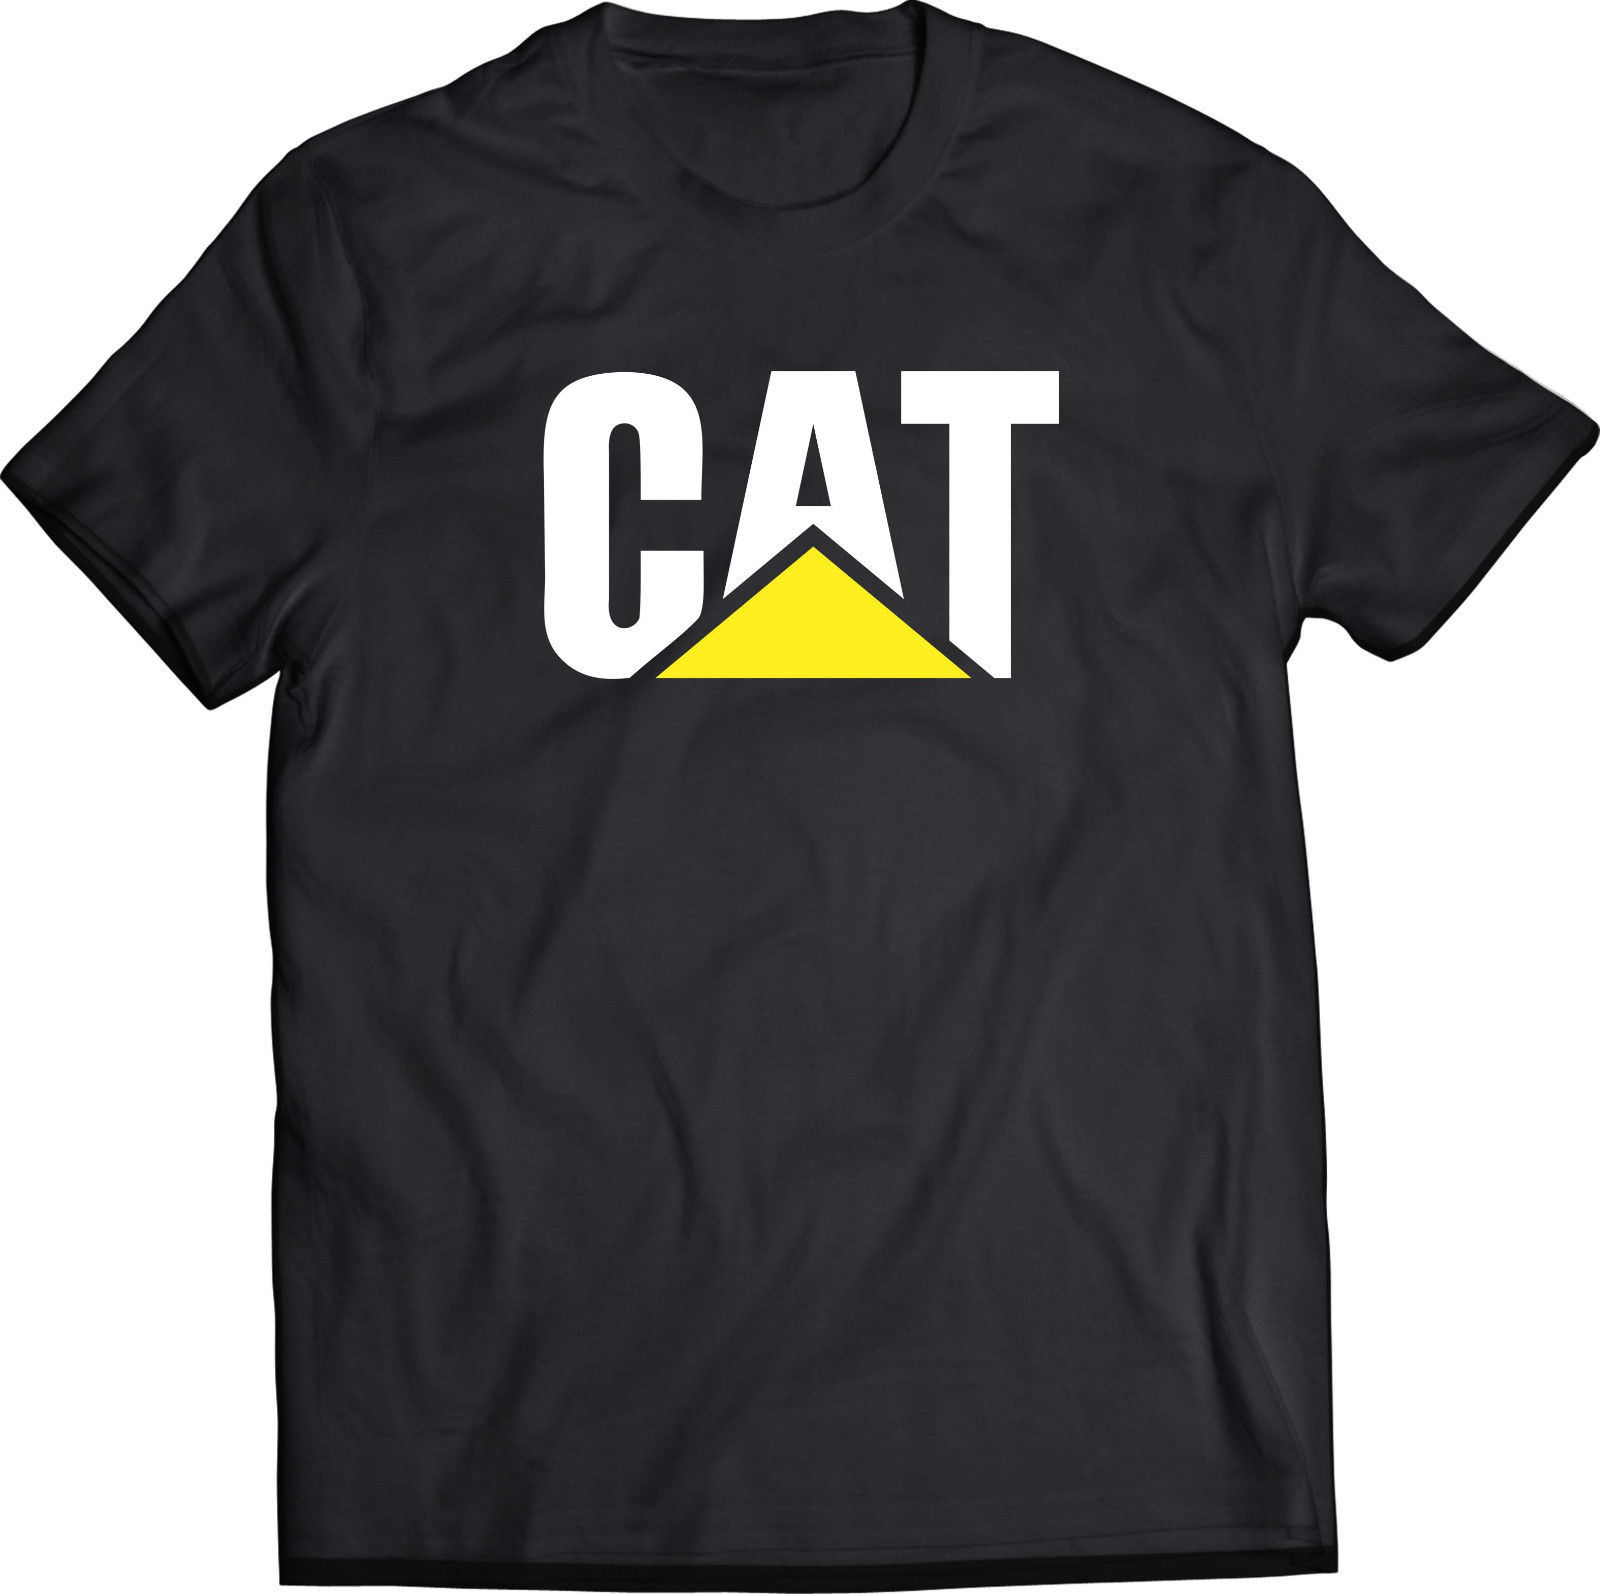 Caterpillar T-shirt: 22 listings